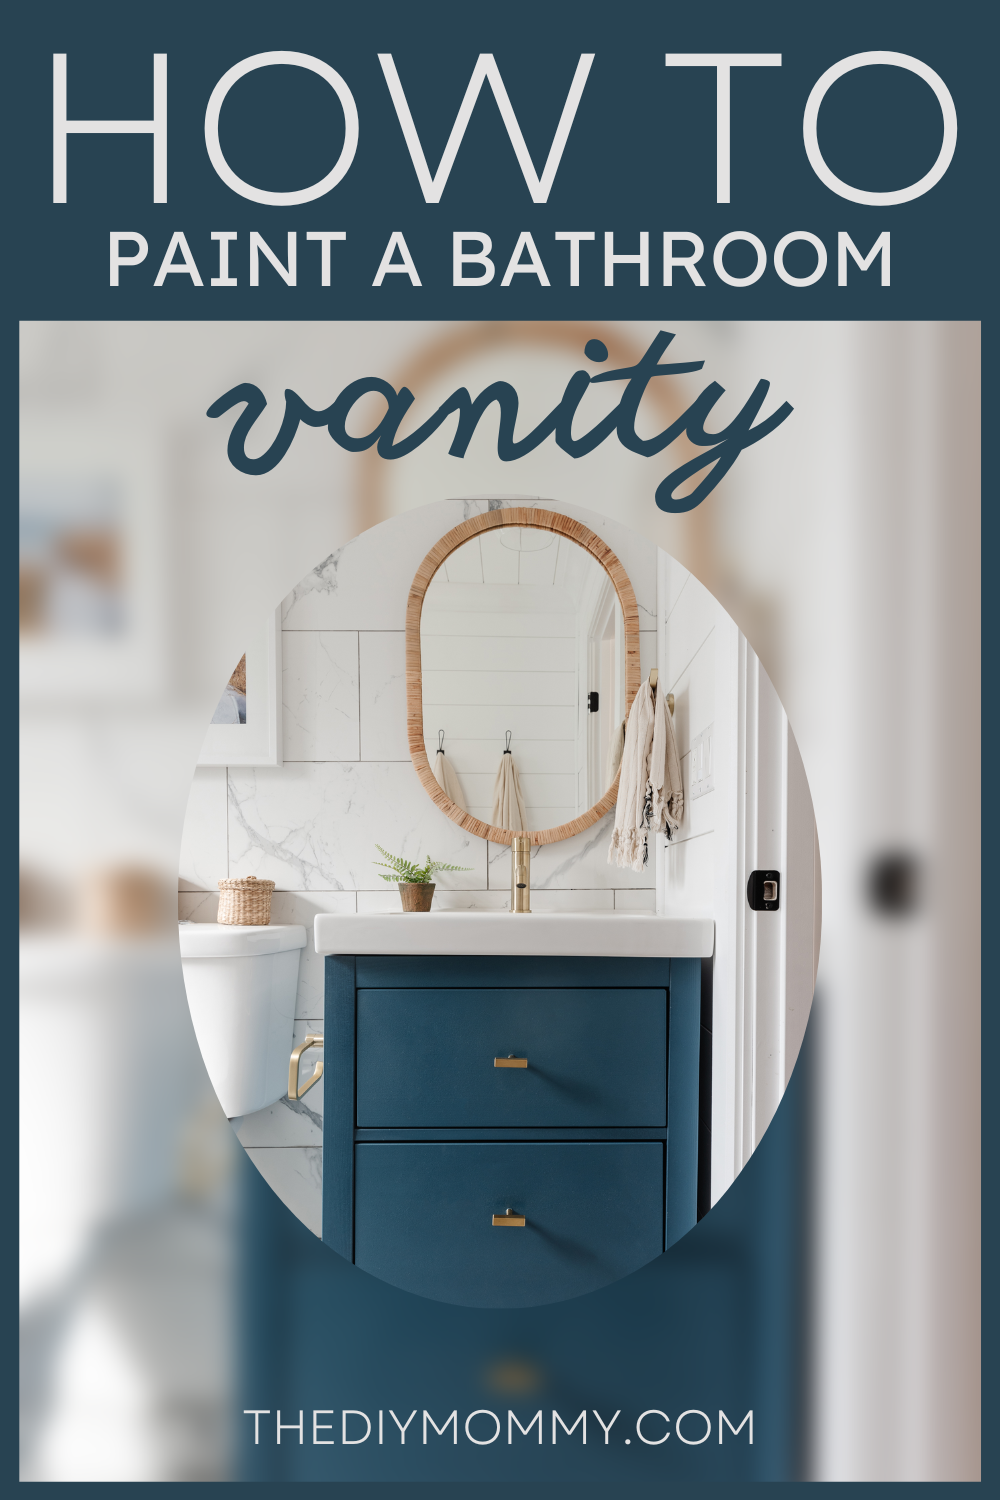 Painted bathroom vanity ideas - how to upgrade an IKEA vanity